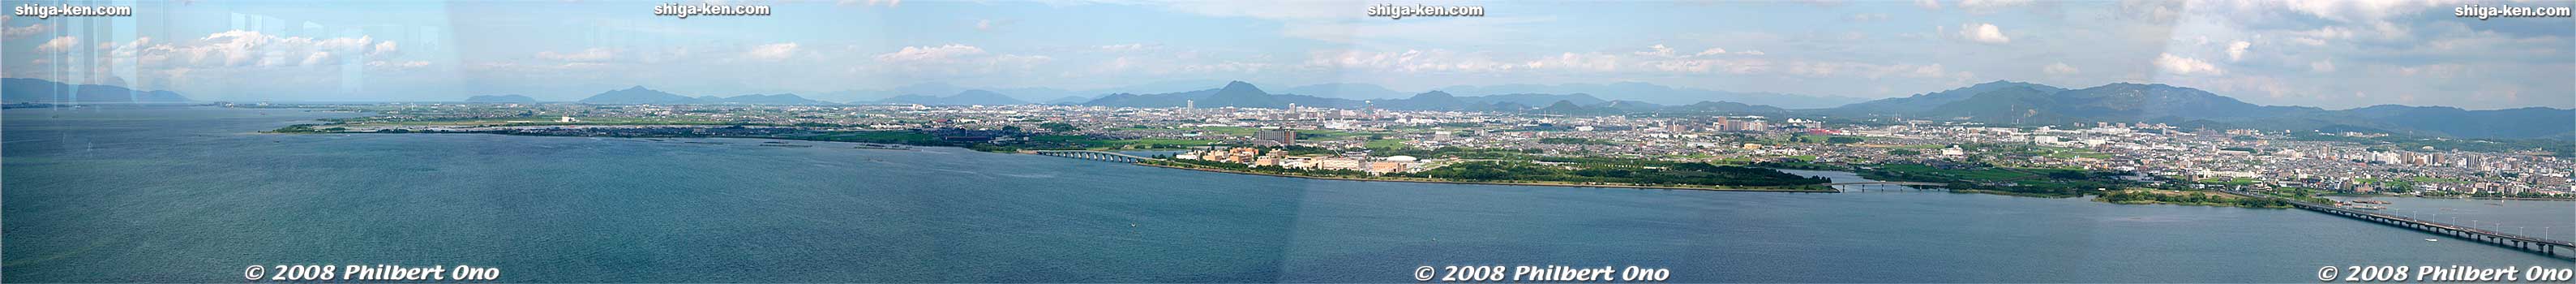 Panoramic photo of the southeastern shore of Lake Biwa as seen from Top of Otsu.
Keywords: shiga otsu lakefront lake biwako 